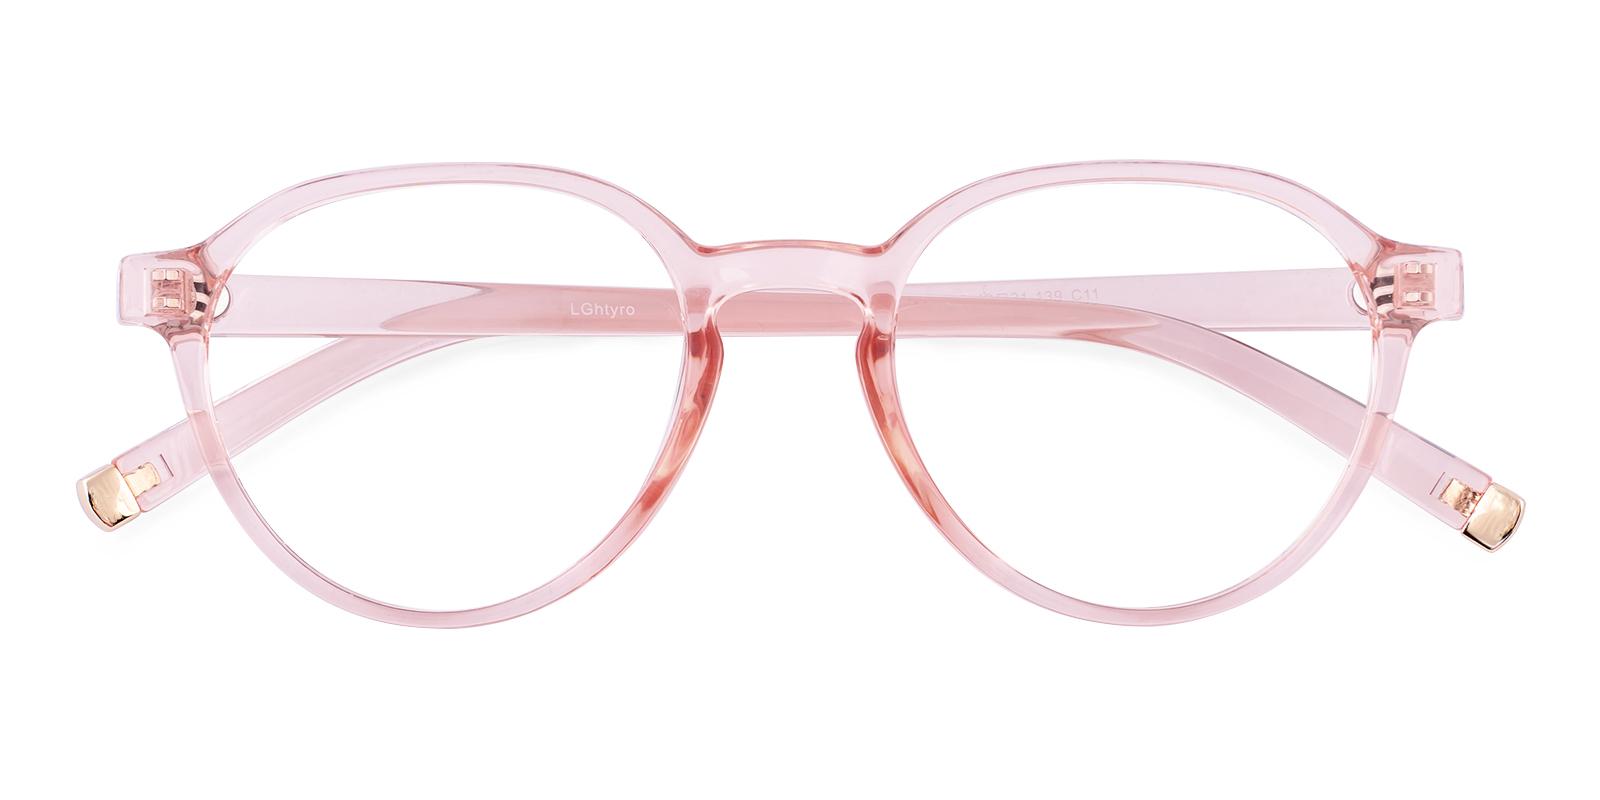 Hedrsive Pink Plastic Eyeglasses , UniversalBridgeFit Frames from ABBE Glasses